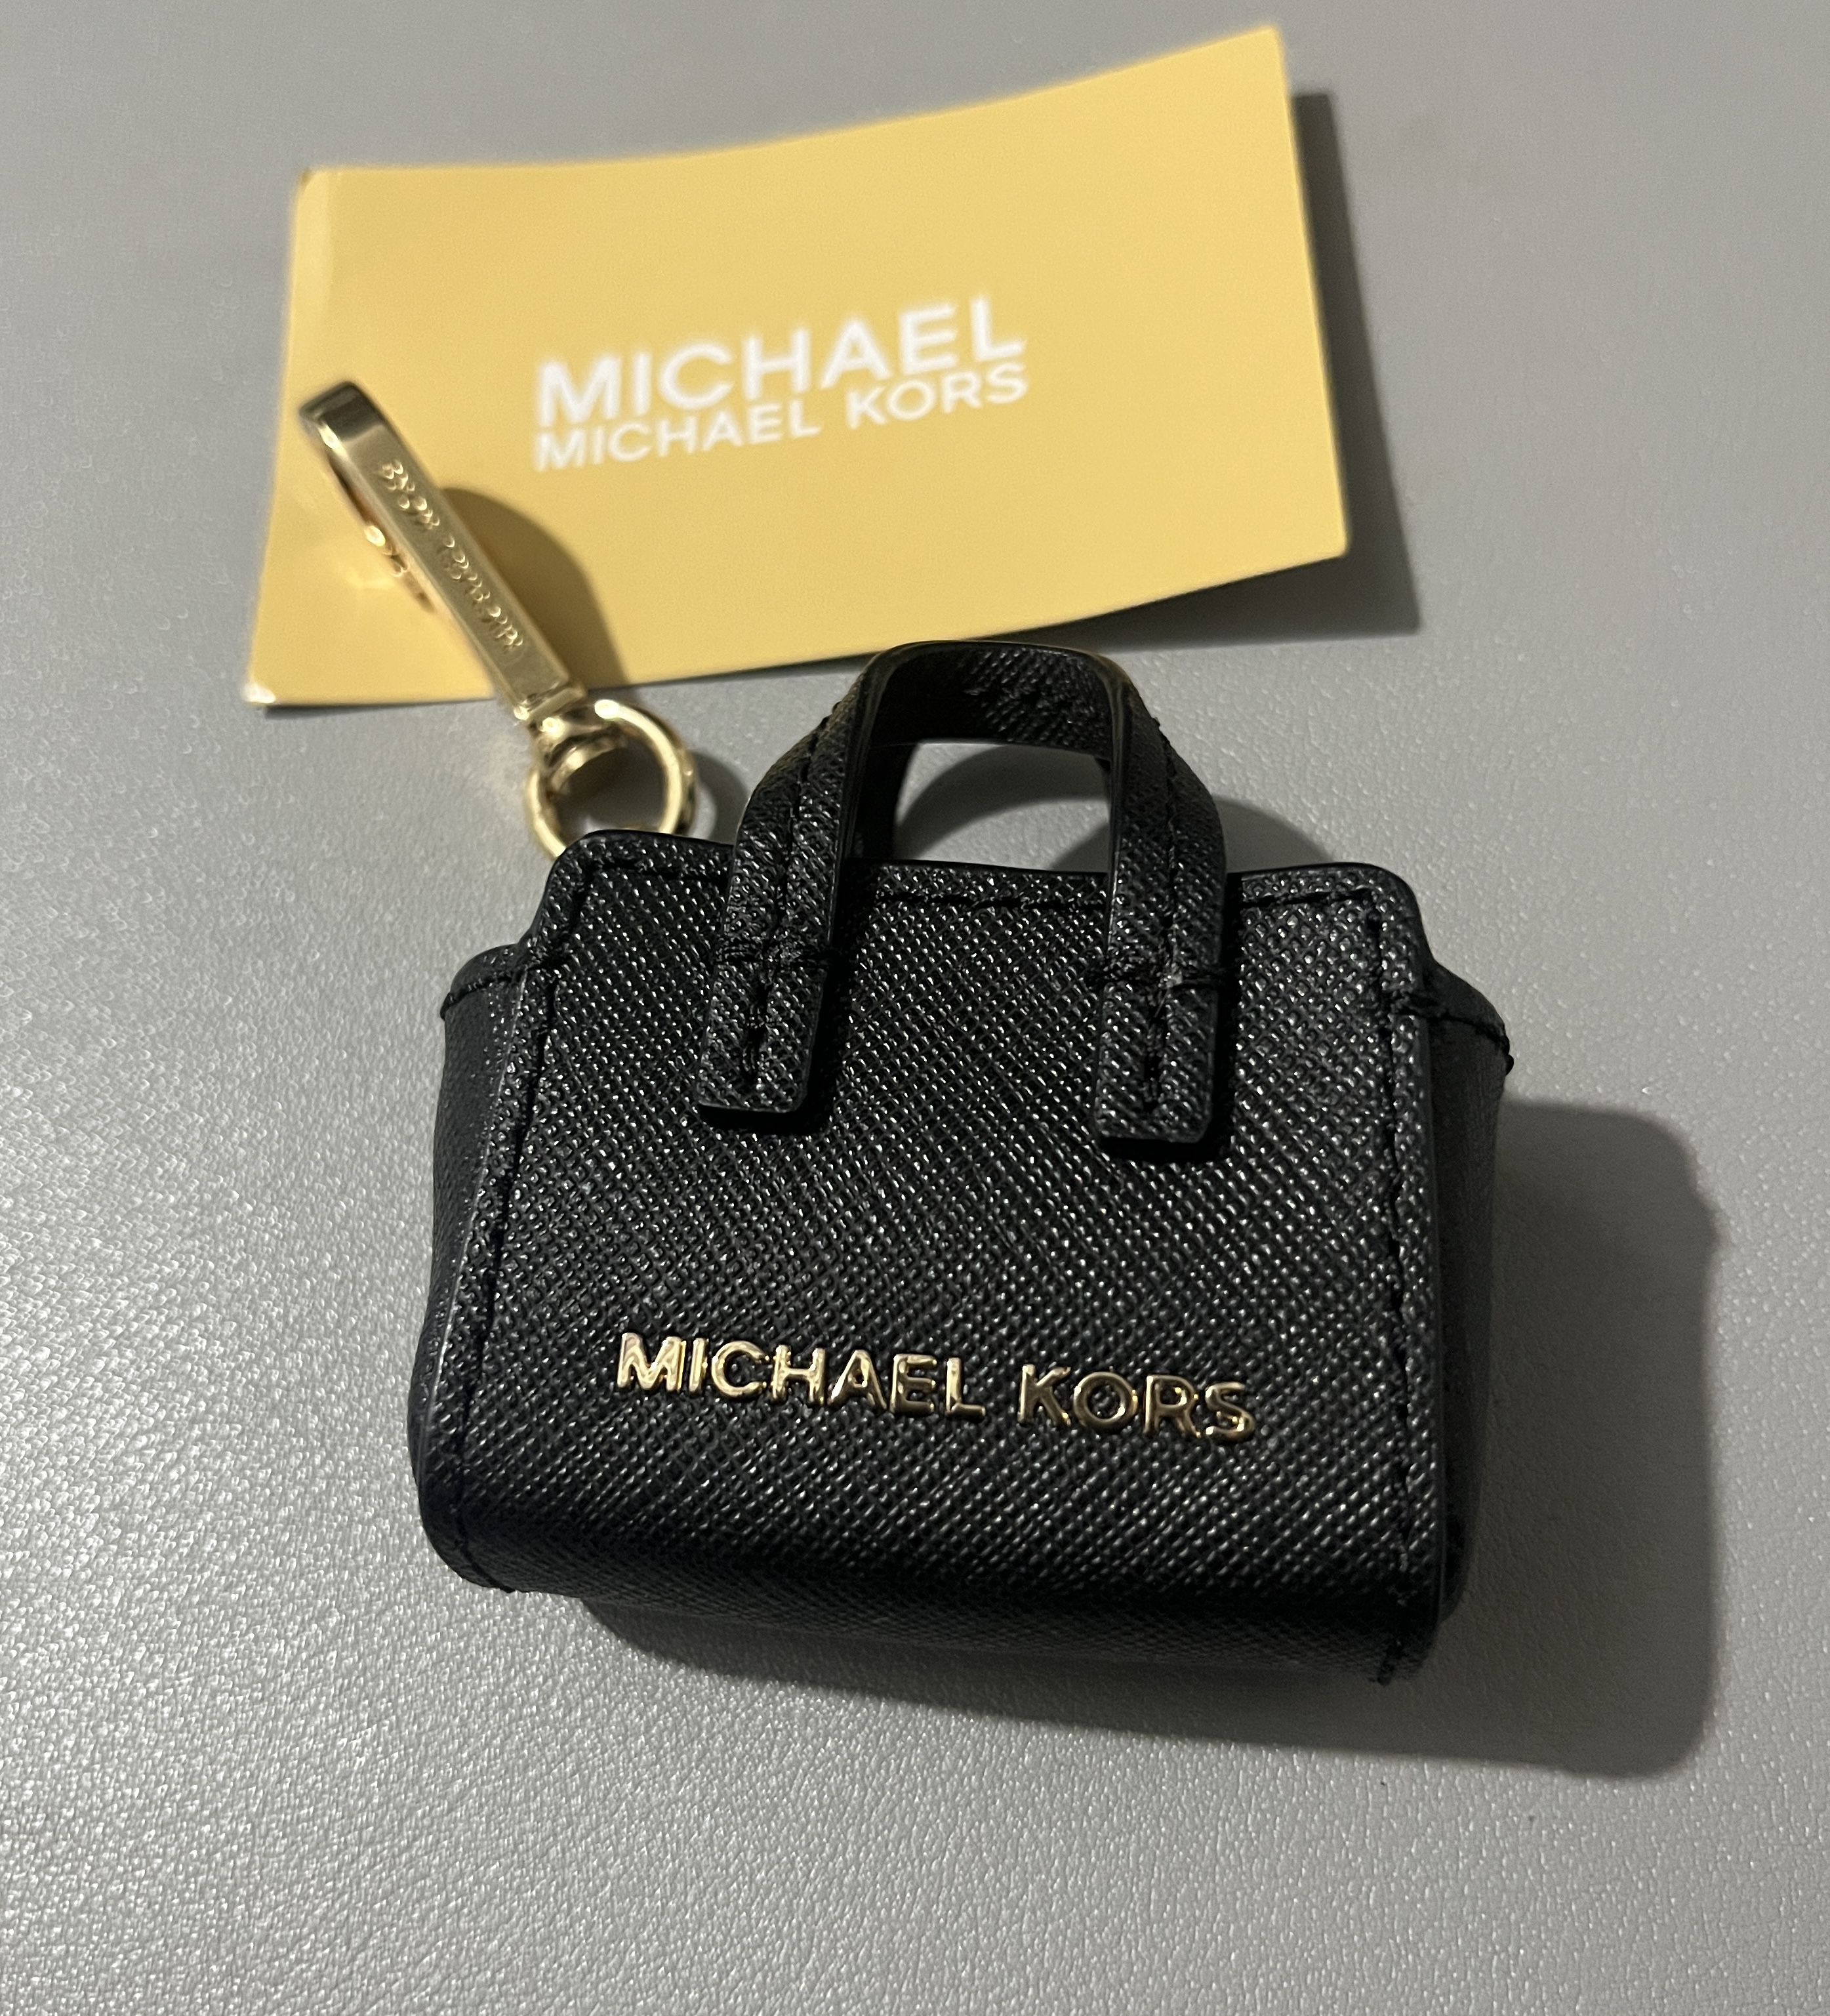 Michael Kors, Bags, Mini Michael Kors Bag Charm